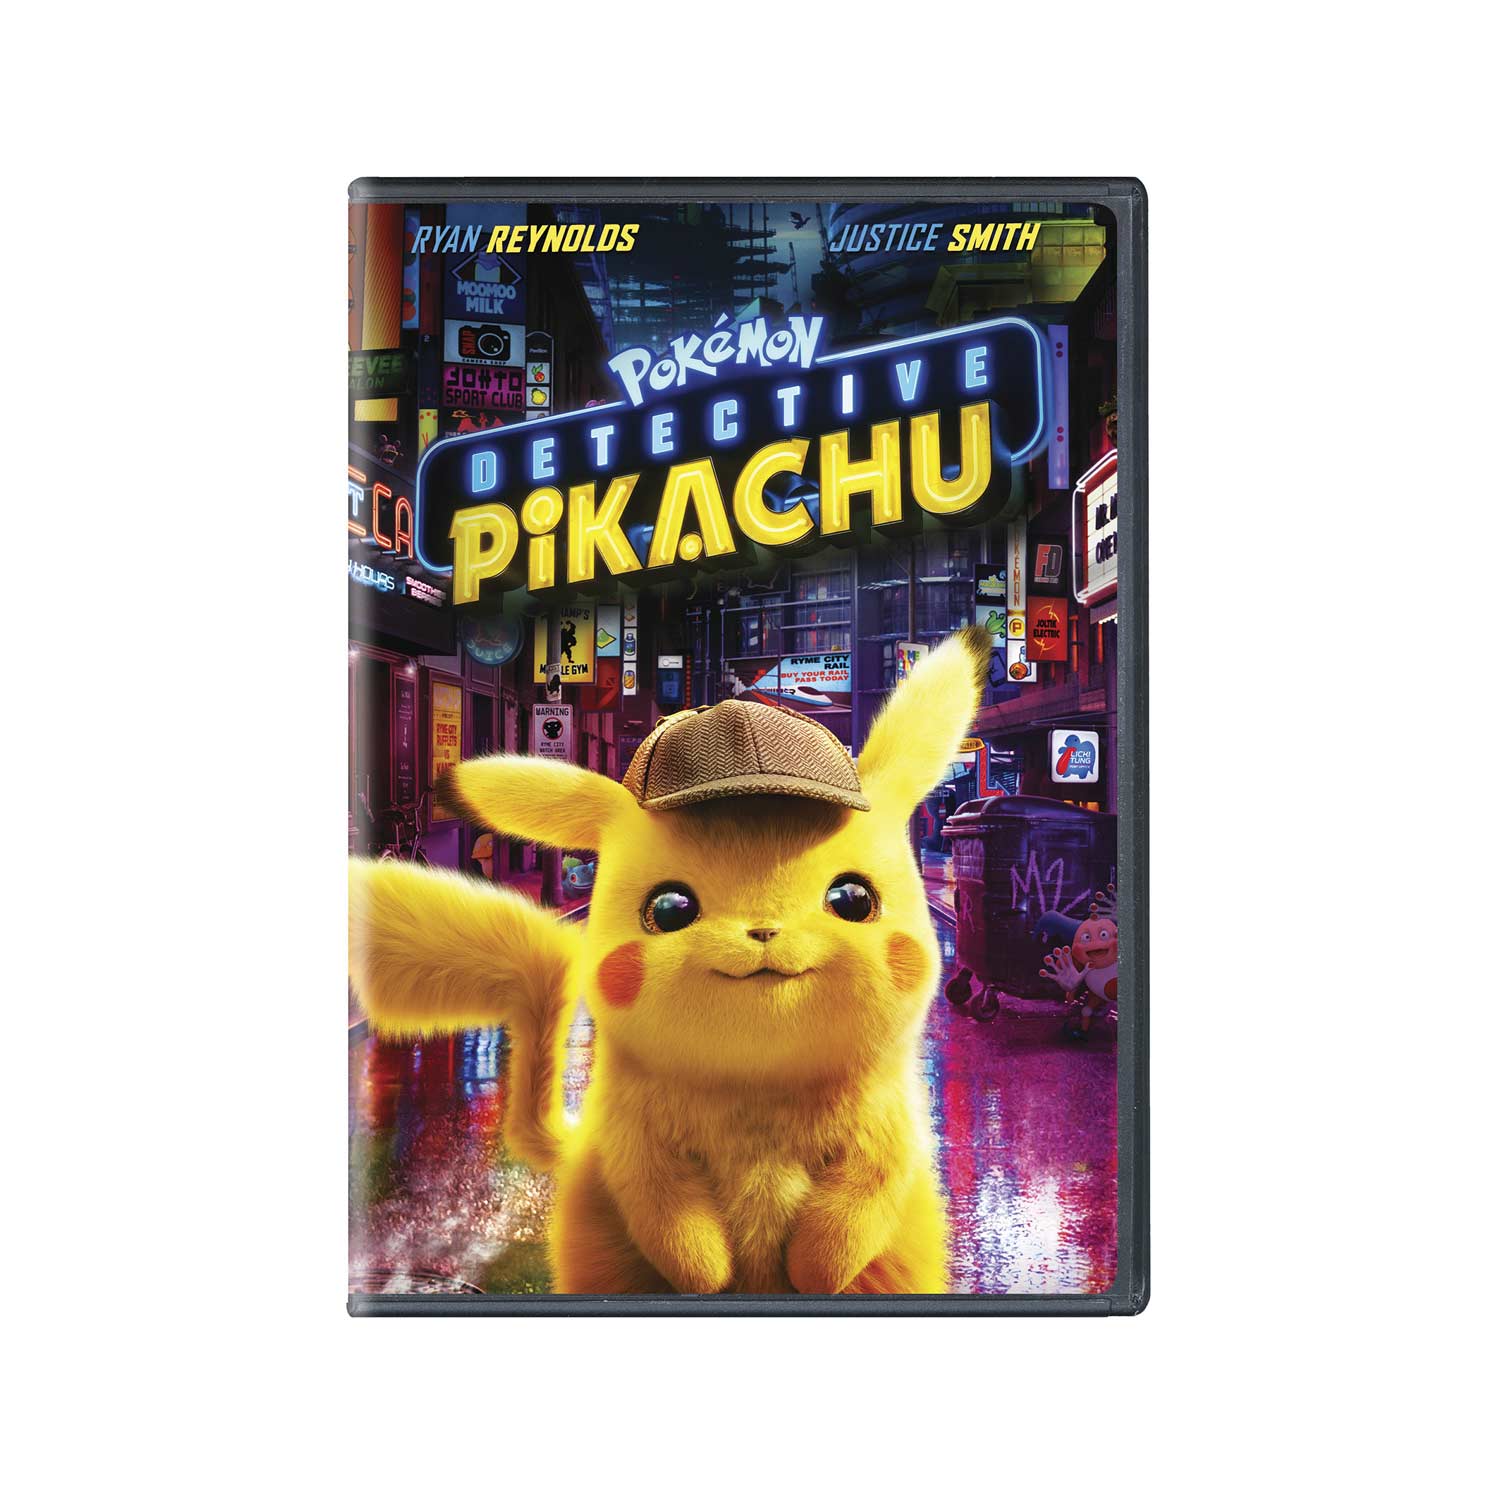 Pokémon Detective Pikachu Dvd Special Edition